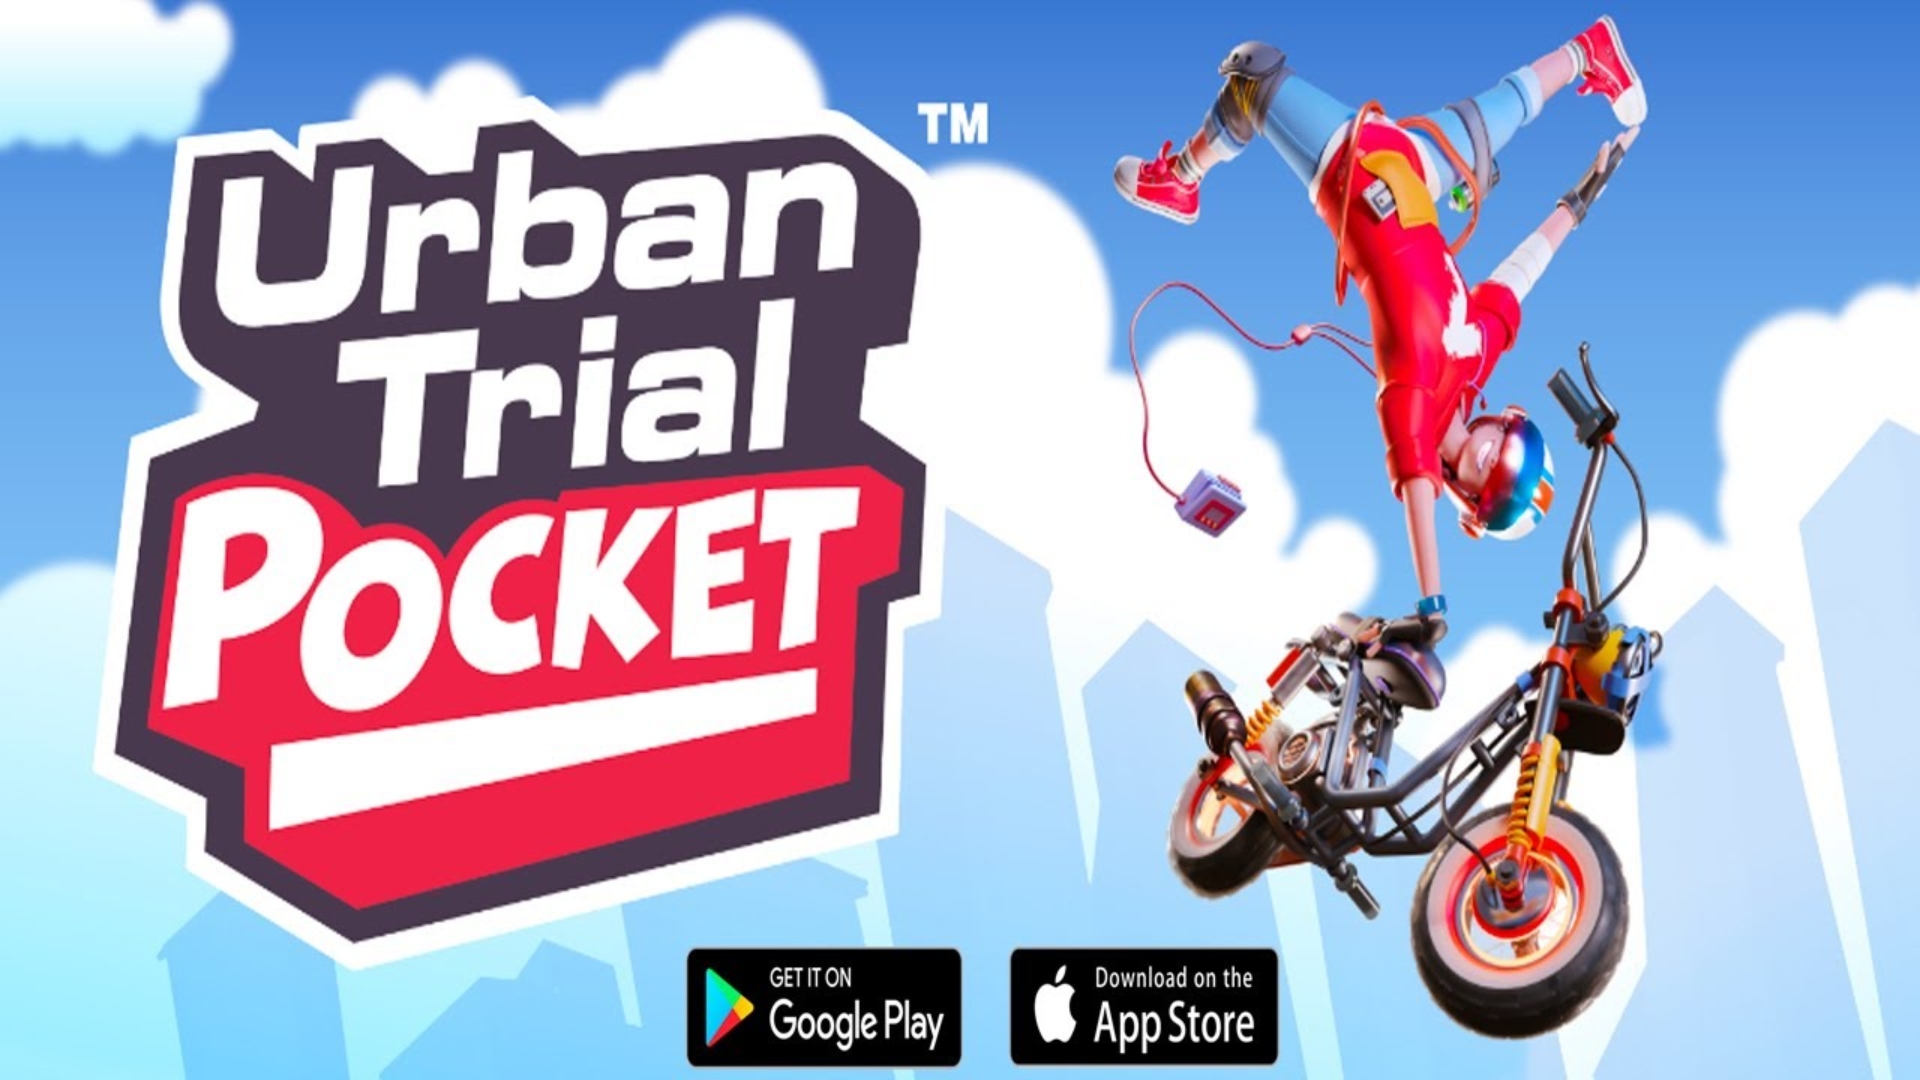 Urban Trial Pocket